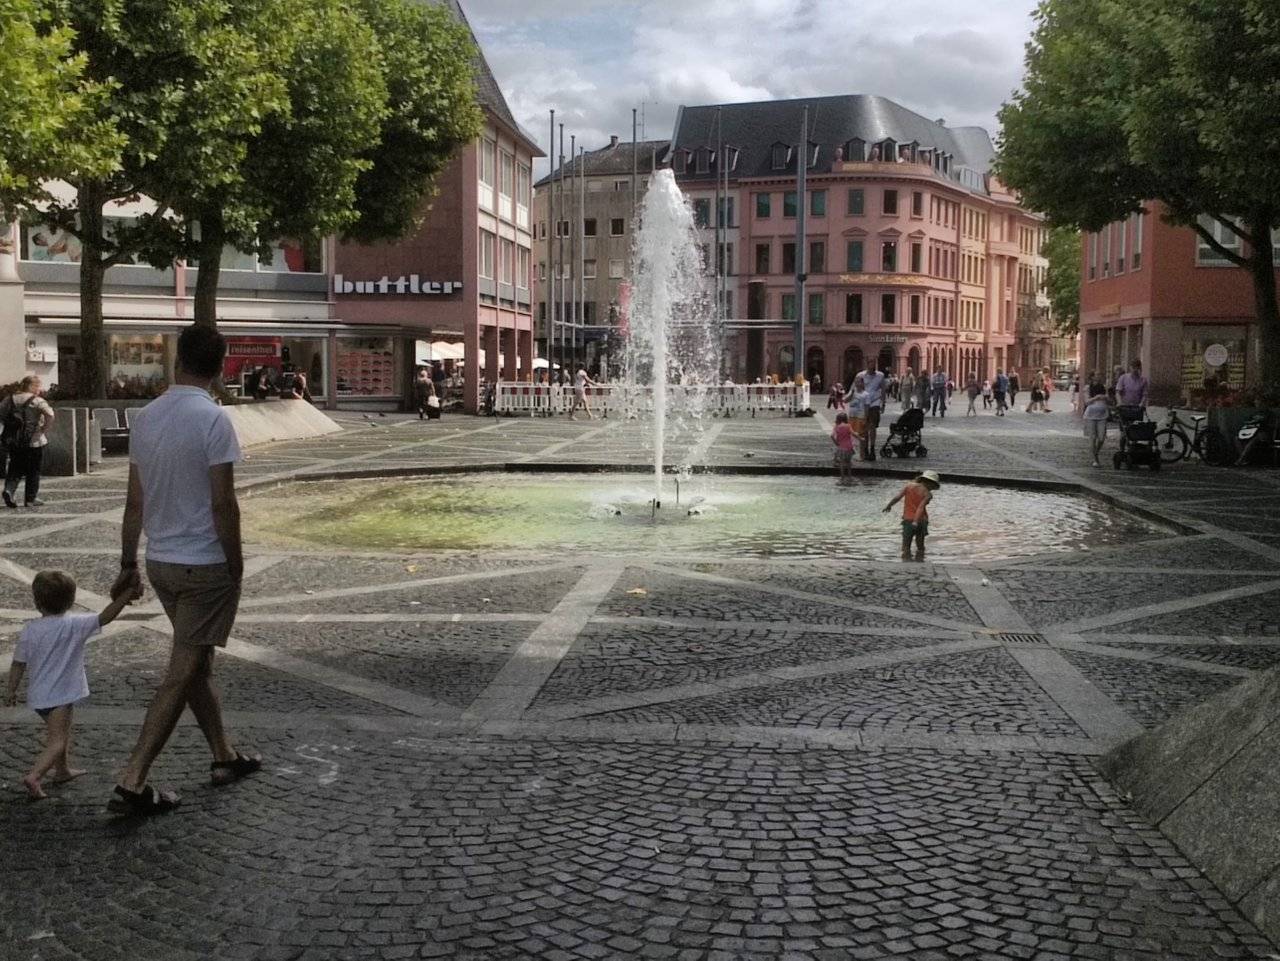 Fountain located at Höfchen leading towards Marktplatz